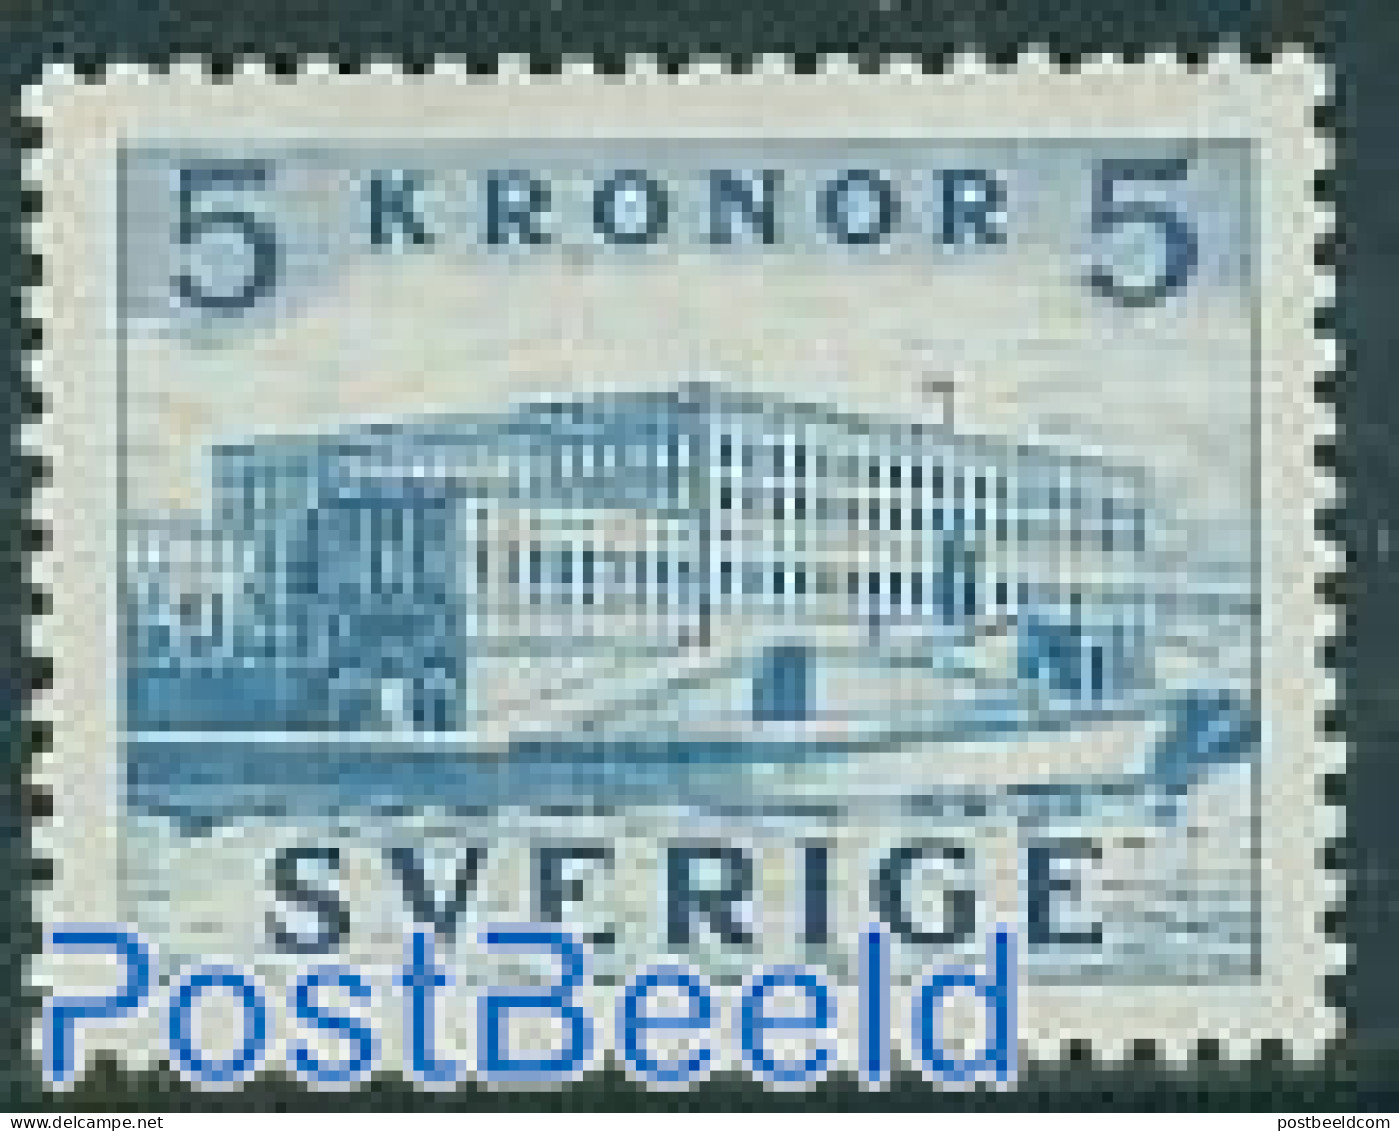 Sweden 1941 Definitive 1v ::, Mint NH, Art - Castles & Fortifications - Ongebruikt